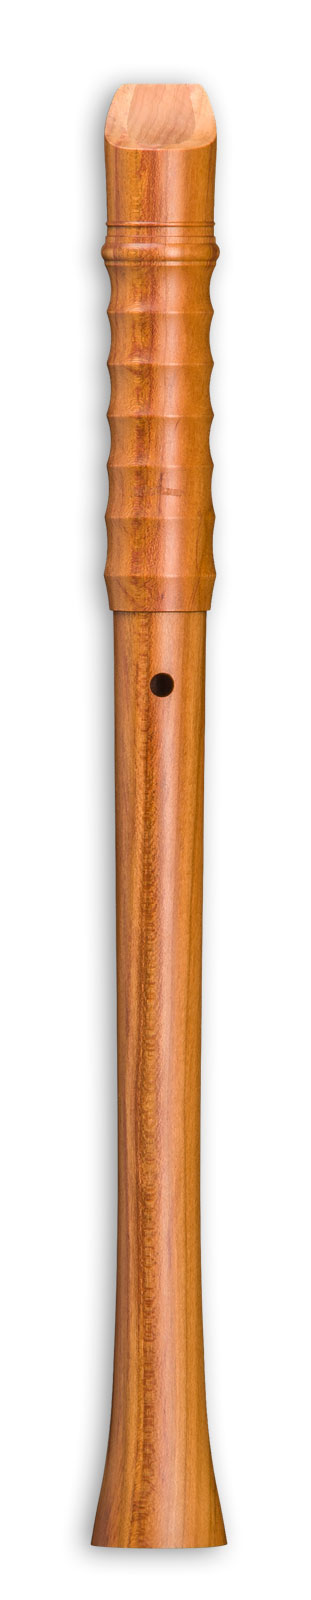 Mollenhauer 4208 Flûte à bec alto en sol Kinseker prunier